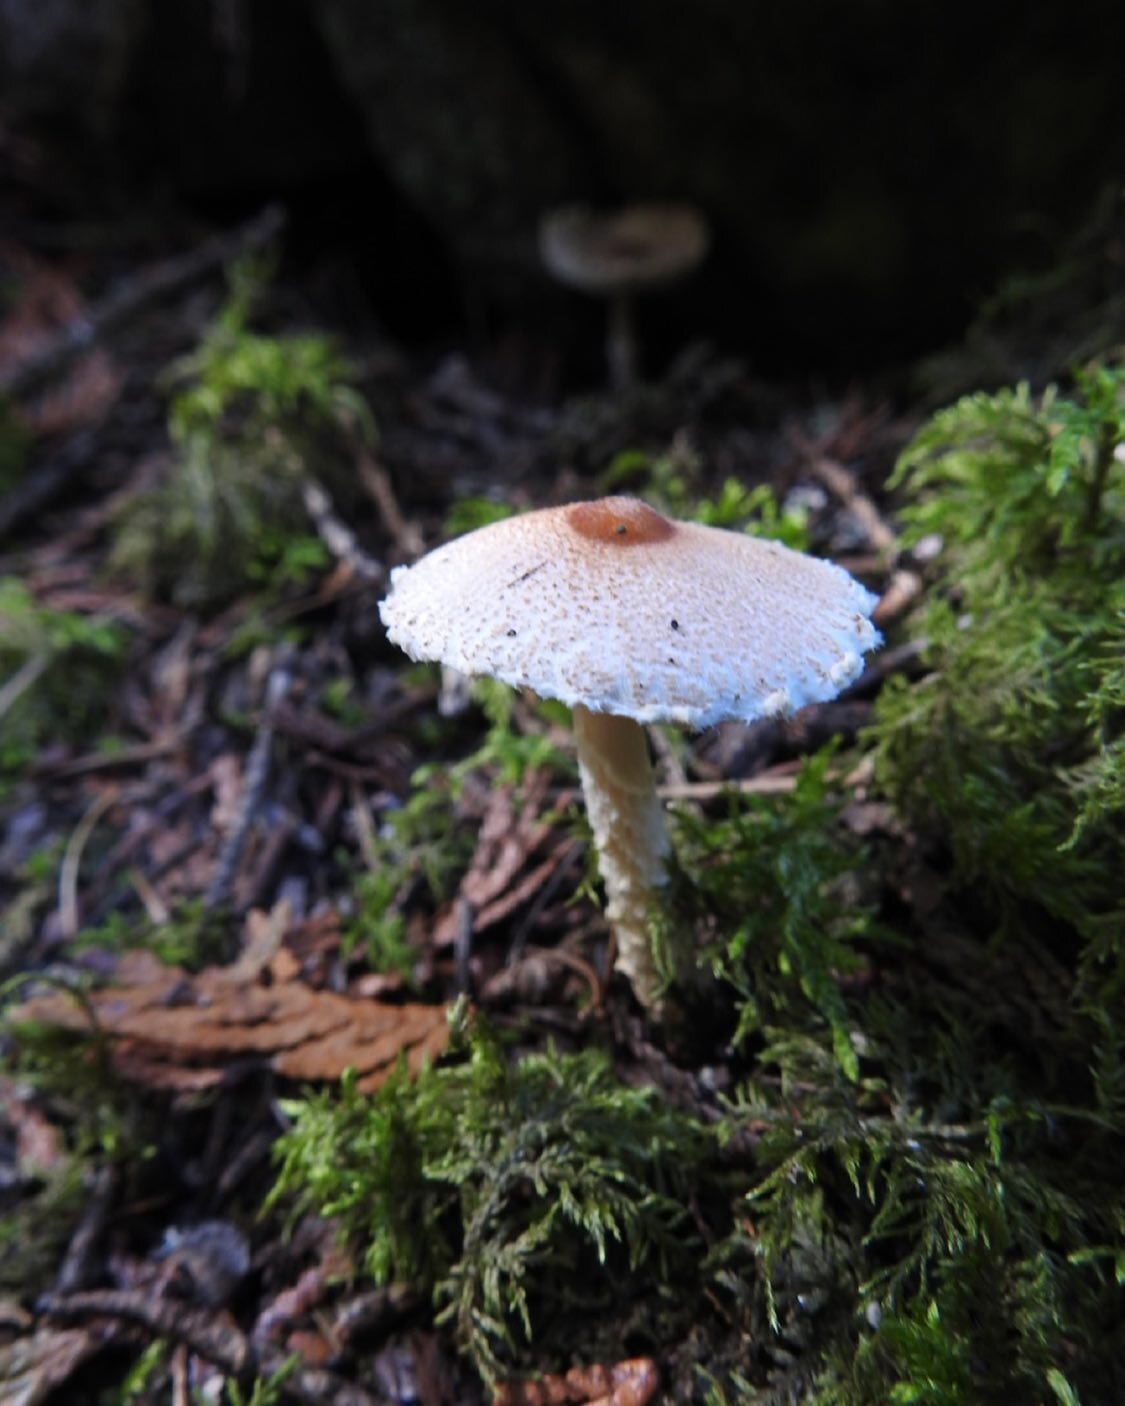 Lepiota cristata, commonly known as the stinking dapperling or the stinking parasol.

#kootenaymushrooms #explorebc #nelsonbc #mushrooms #fungi #fungifan #mushroomhunter #wild #forest #sporetheworld #fungilover #mushroomlover #mycelium #oldgrowth #sa